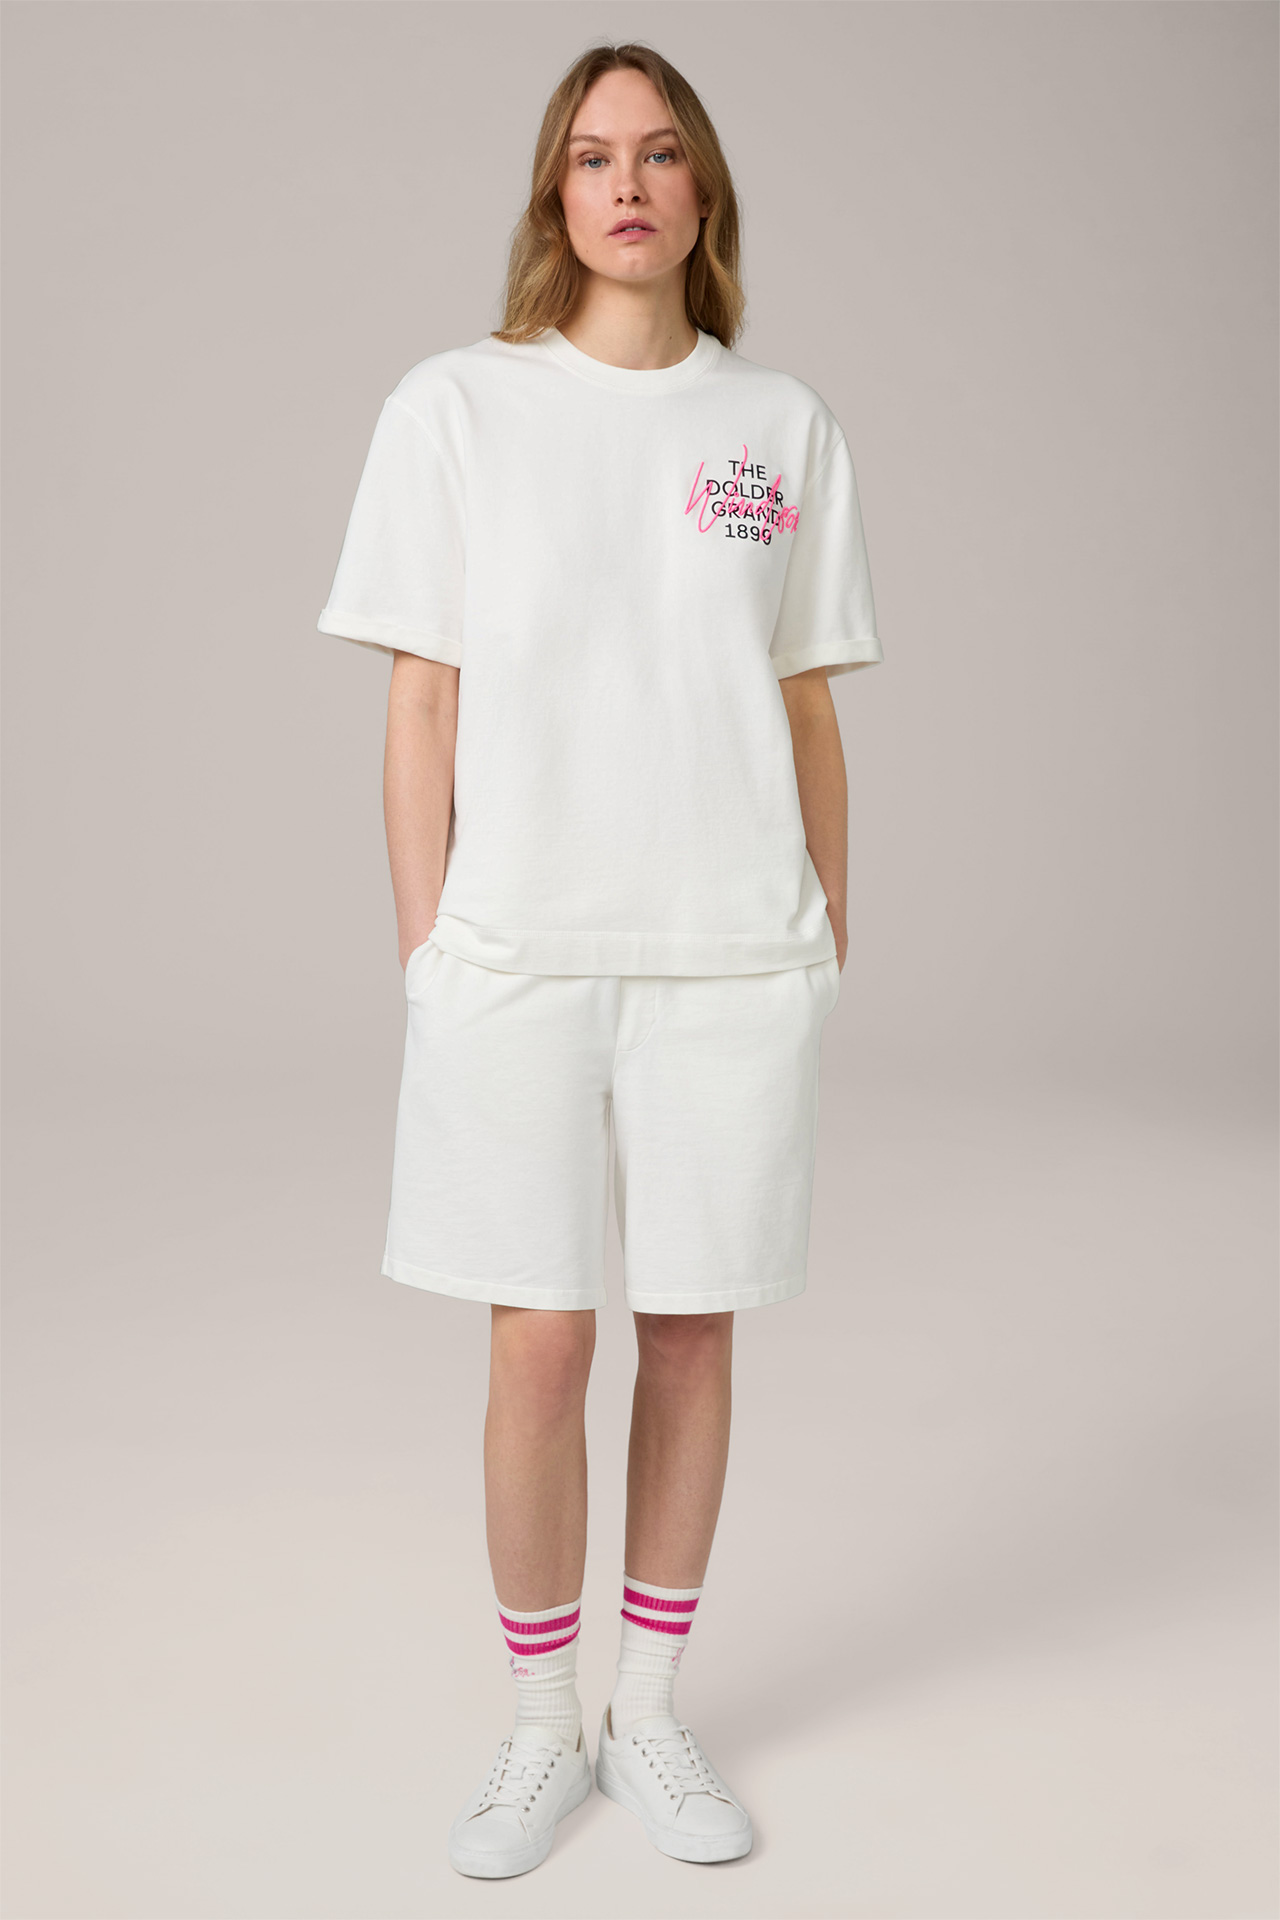 Unisex cotton loungewear shirt in ecru